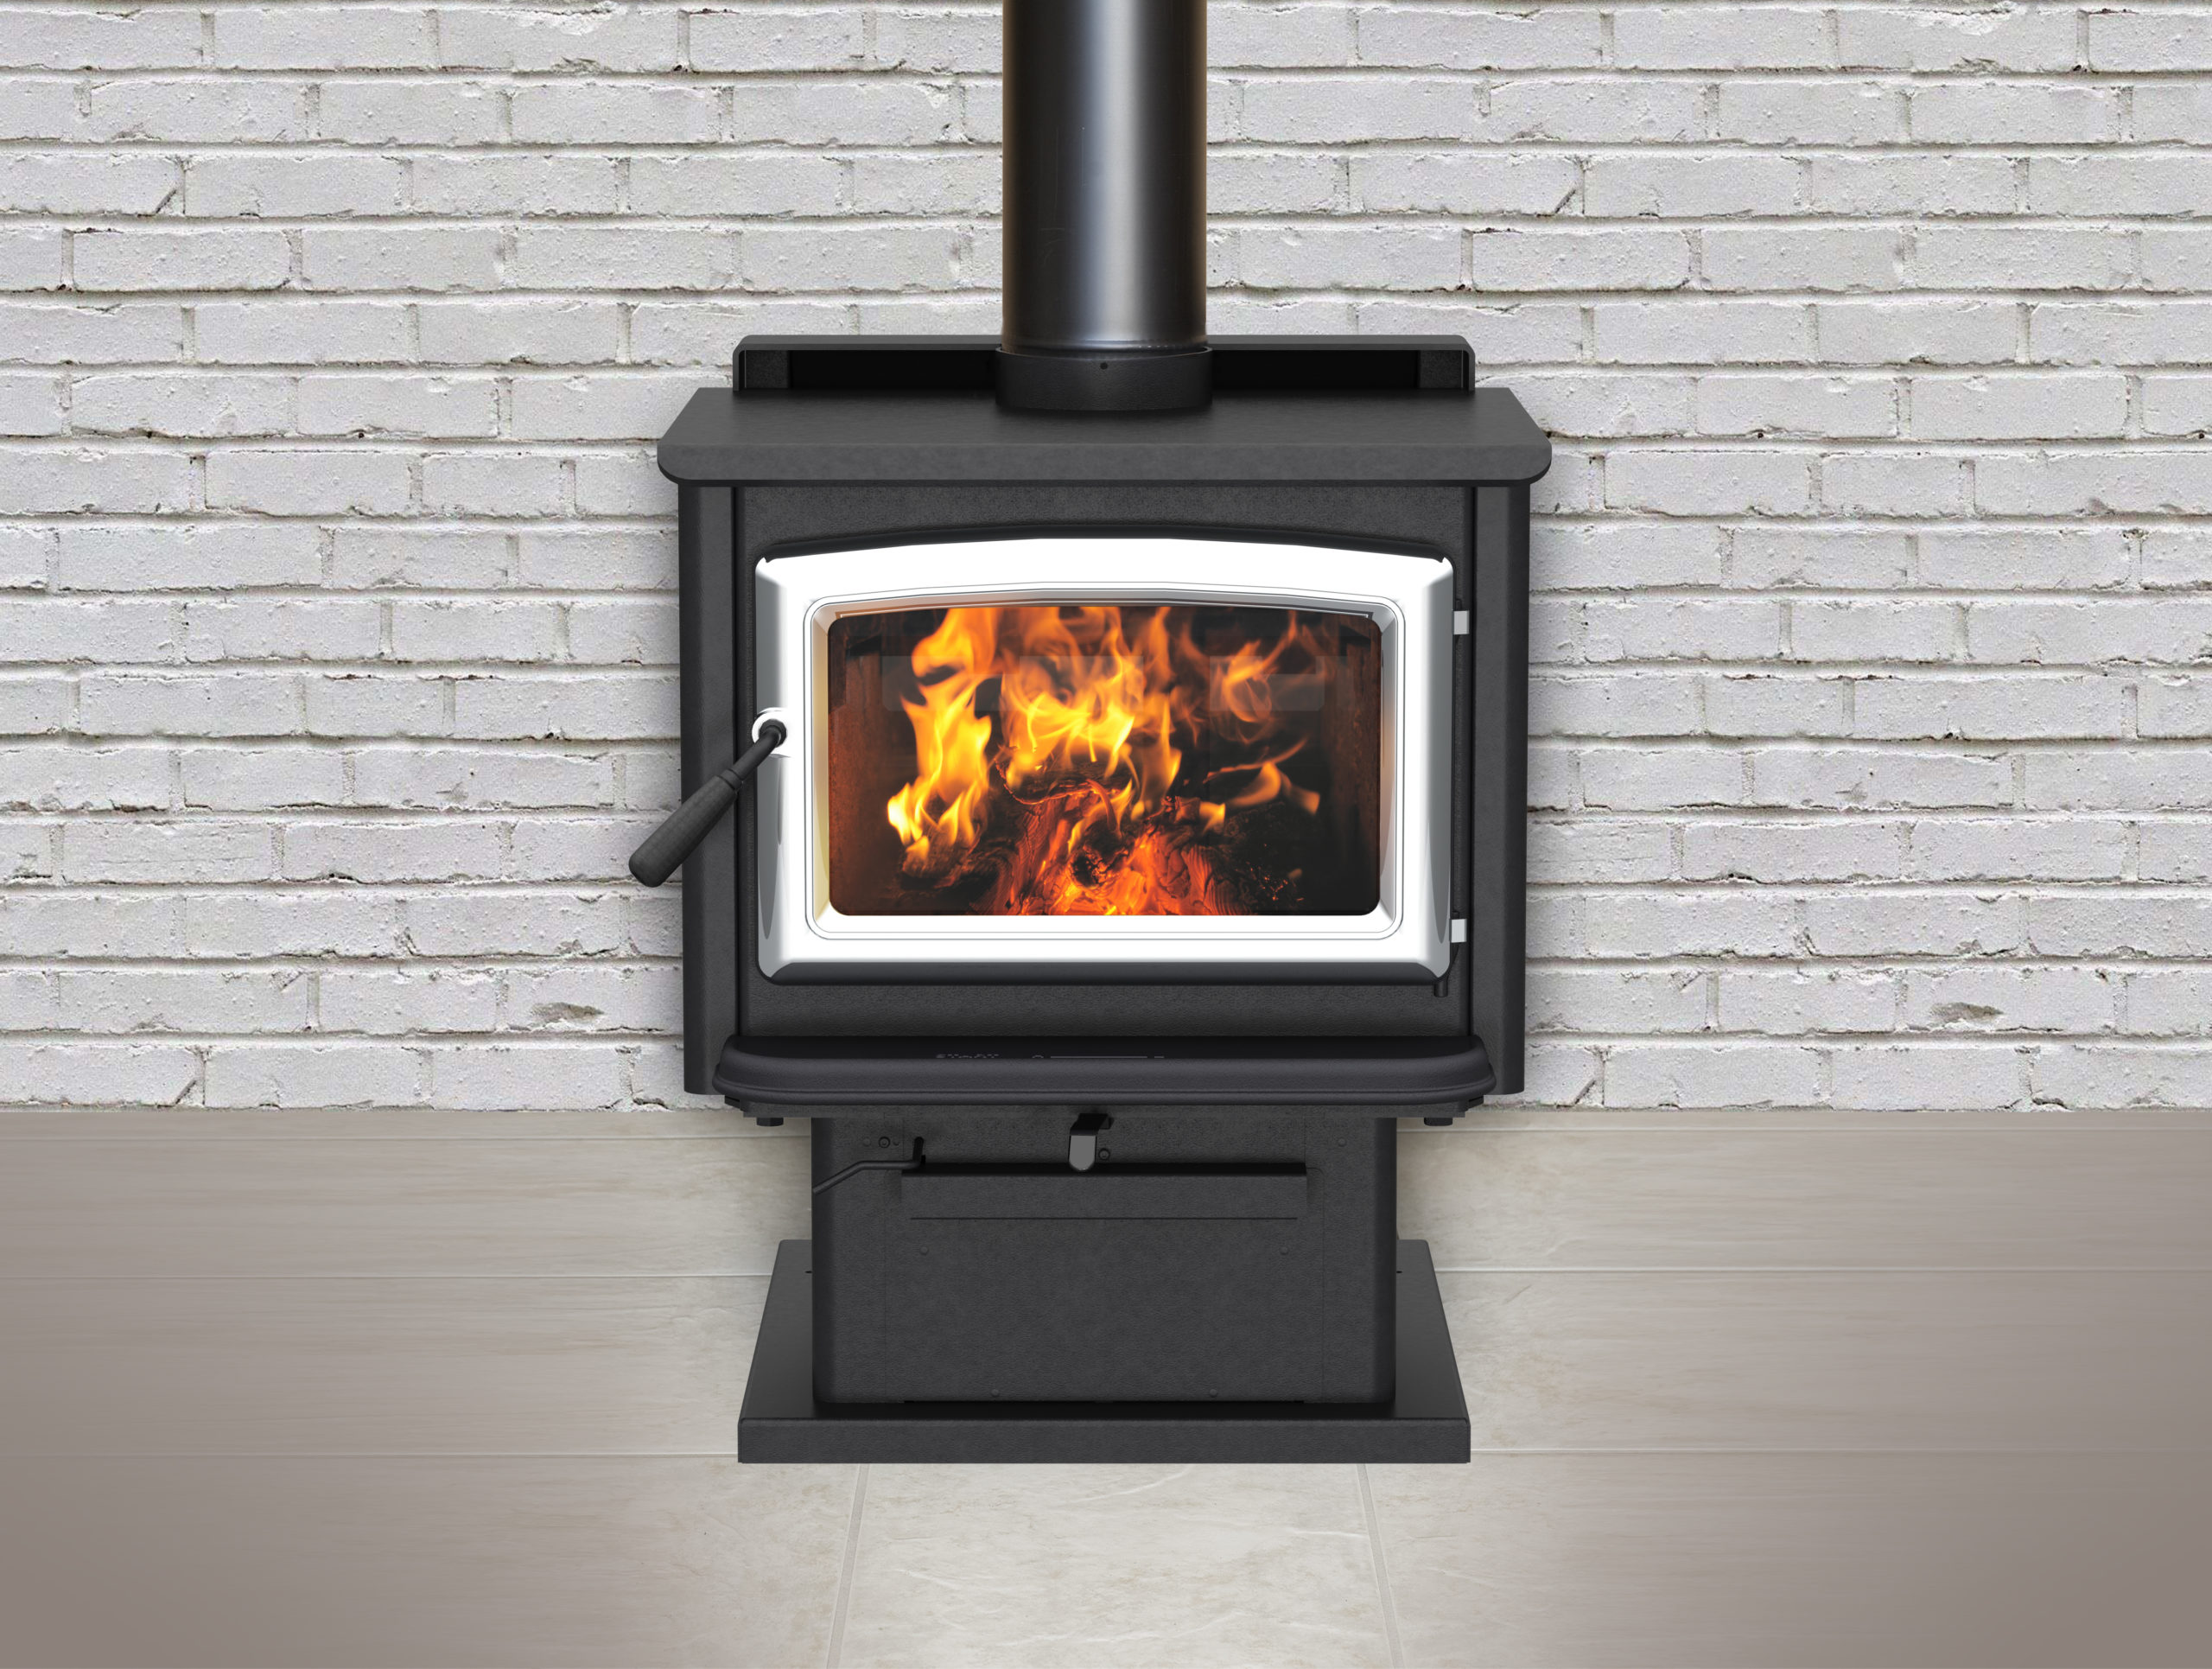 Super LE wood stove pedestal model with brushed nickel door